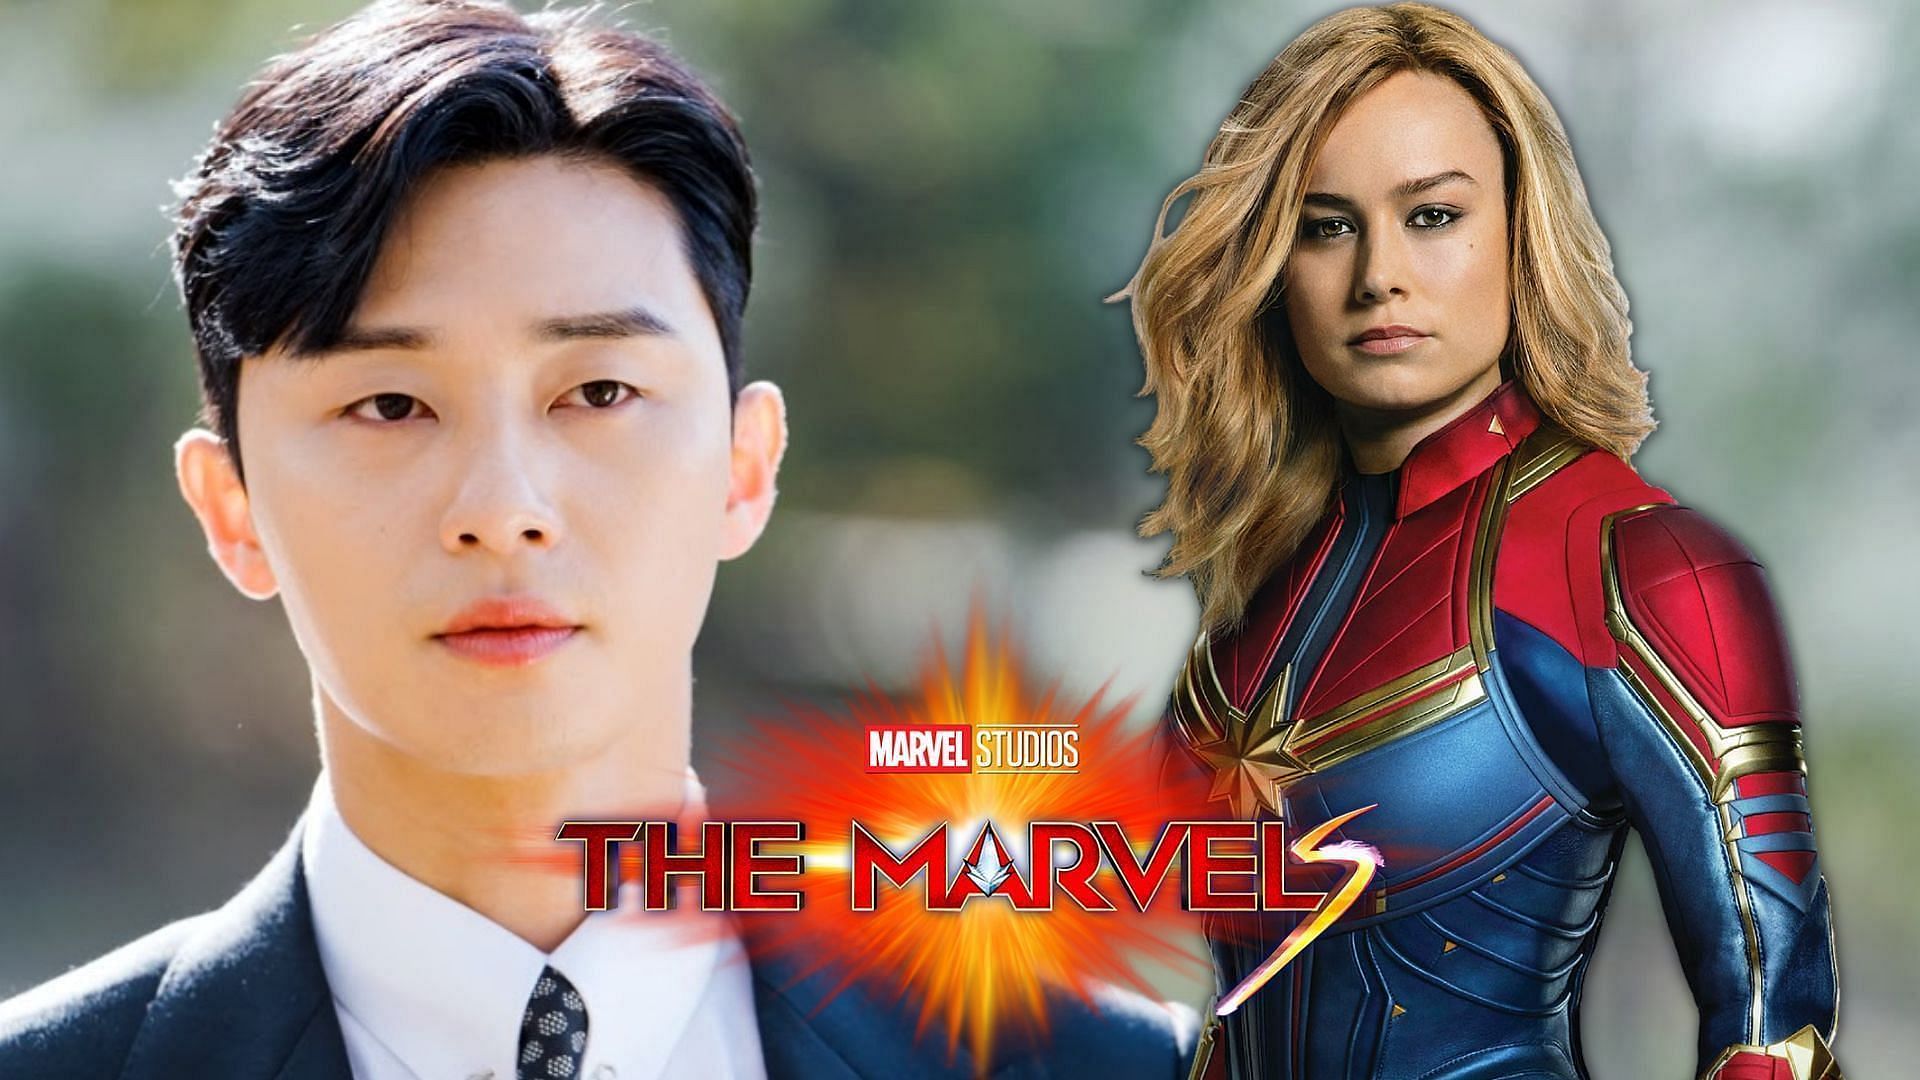 Brie Larson to marry Park Seo-joon in The Marvels (Image via Sportskeeda)